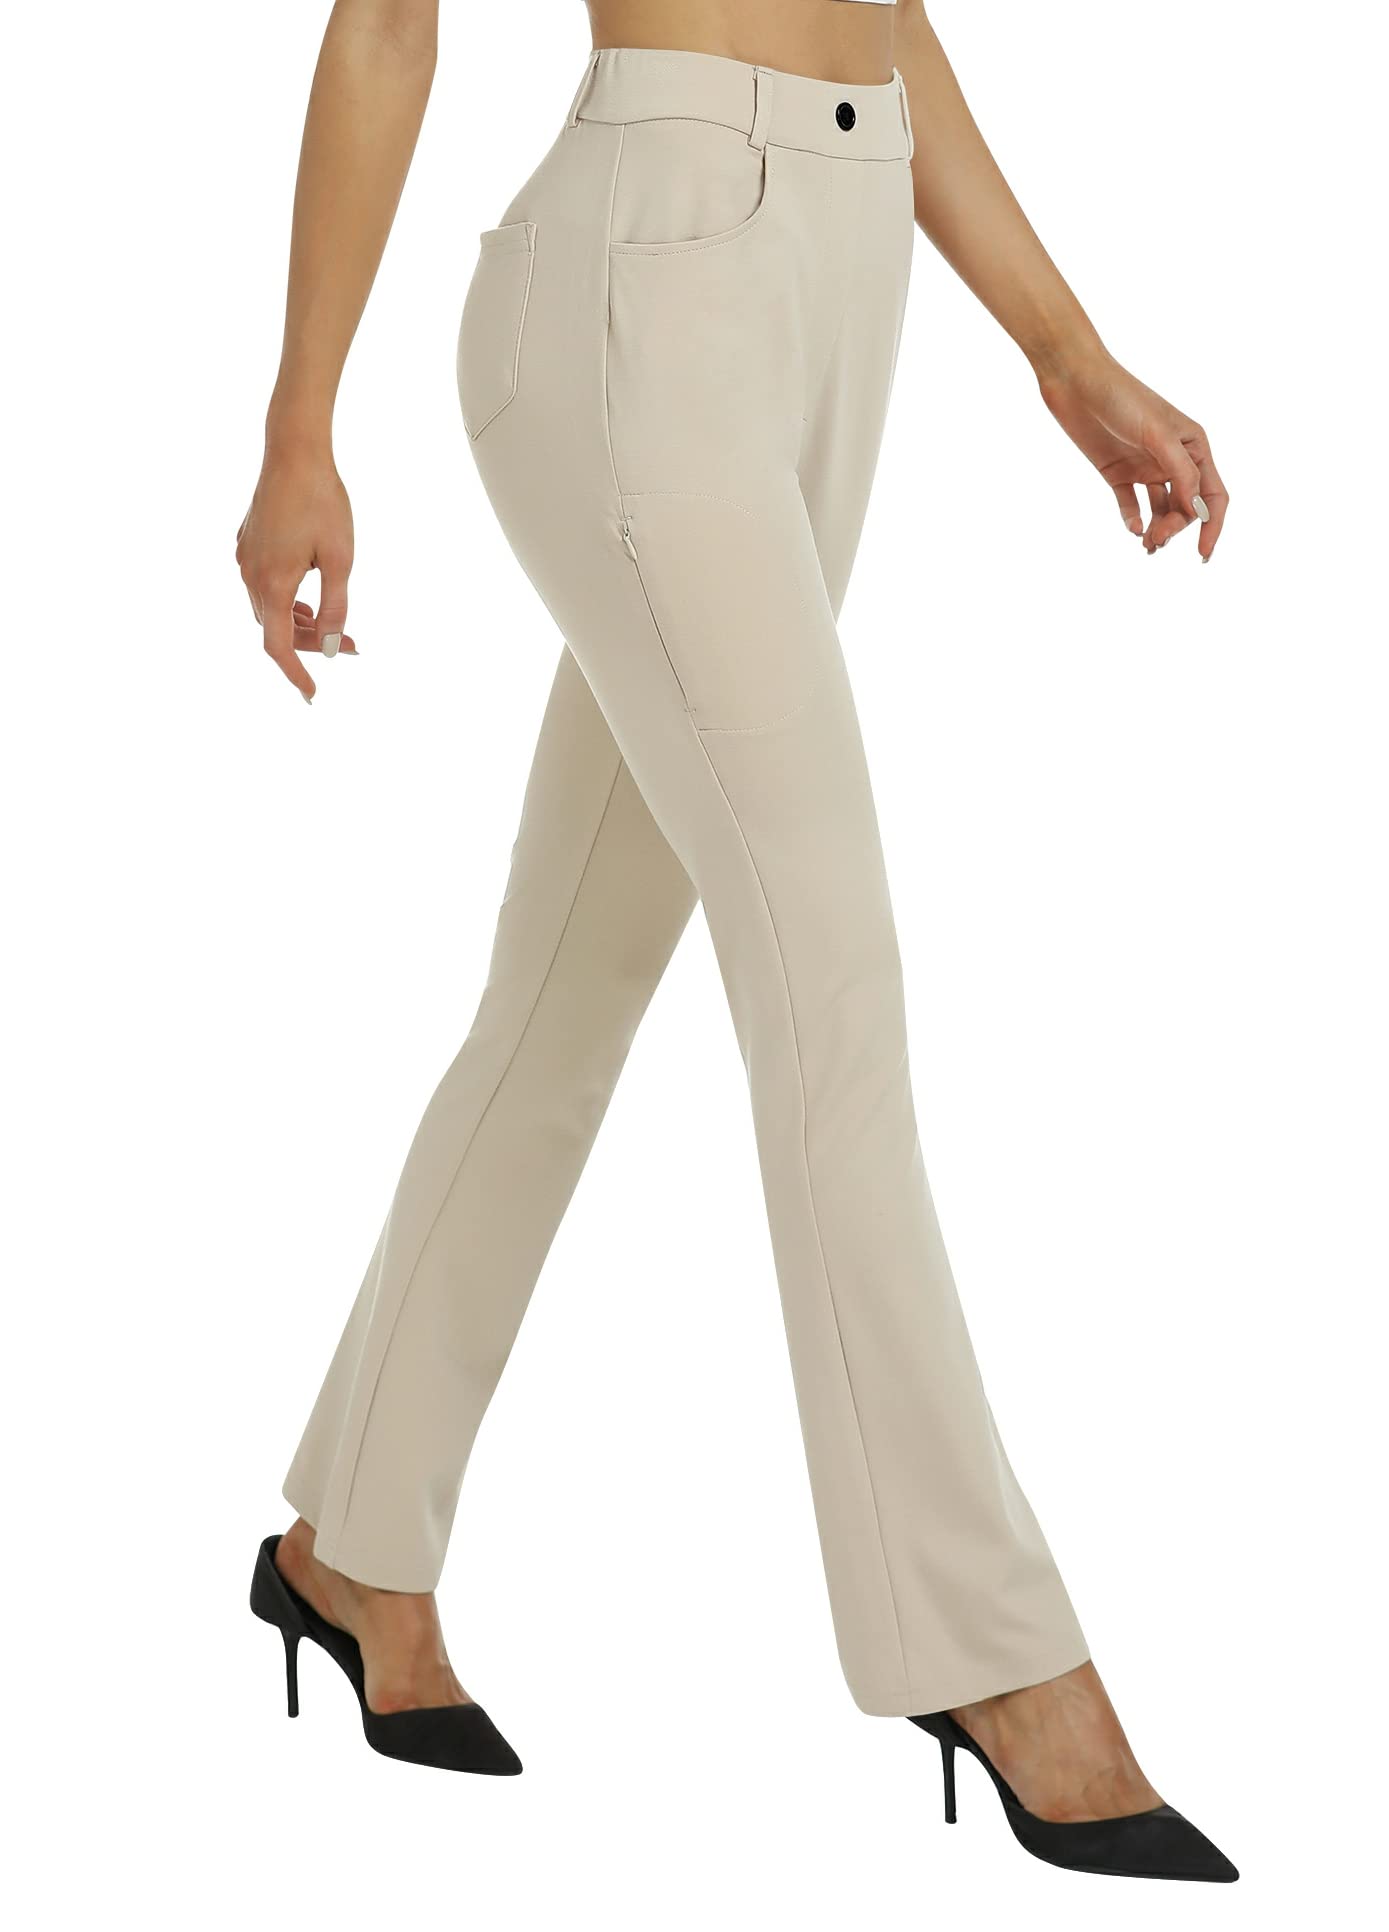 CHGBMOK Jeans Women Butterfly Pants Tall Dress Pants for Women